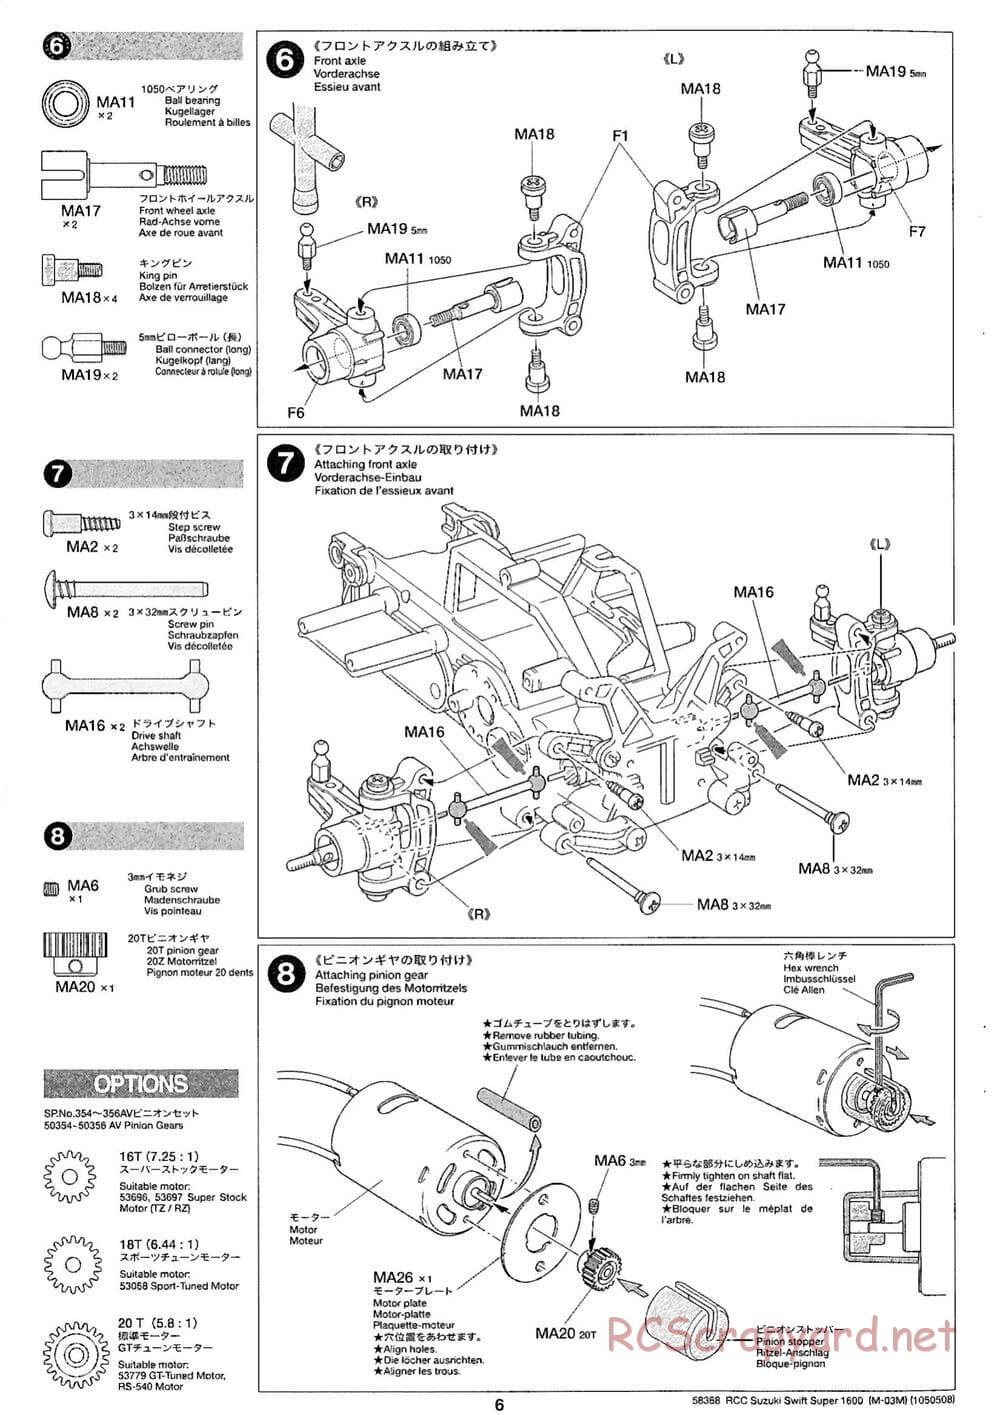 Tamiya - Suzuki Swift Super 1600 - M03M Chassis - Manual - Page 6